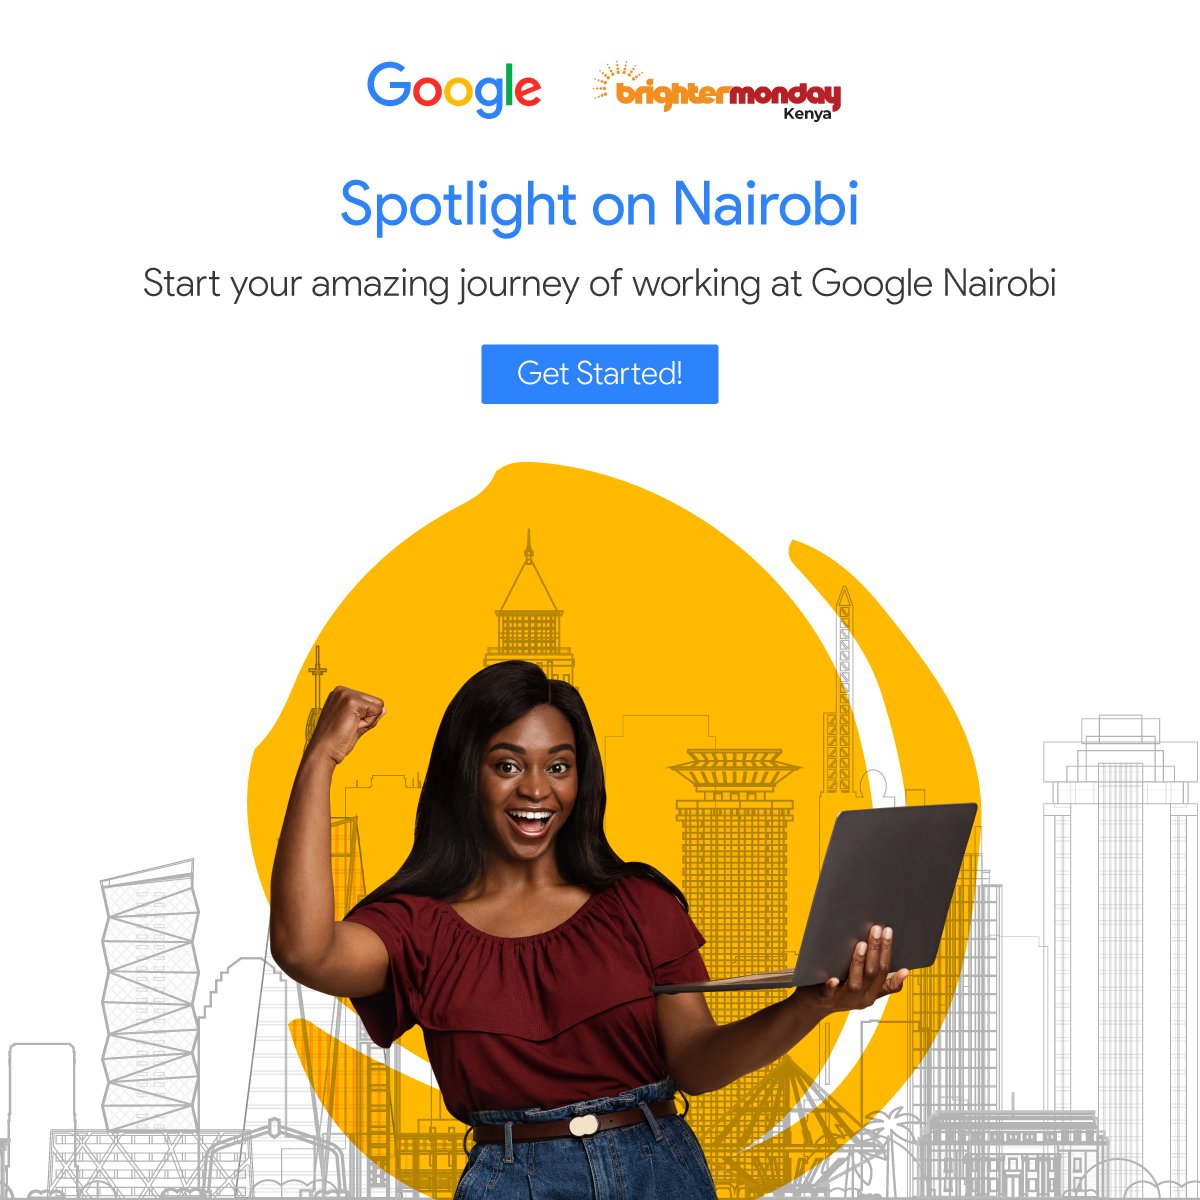 Are you an experienced software engineer eyeing Google's Nairobi opportunities? Join Google’s Spotlight on Nairobi Program now!

Apply >> brnw.ch/21wC5k4  #BrighterMondayKenya #GoogleSpotlight  #NairobiJobs